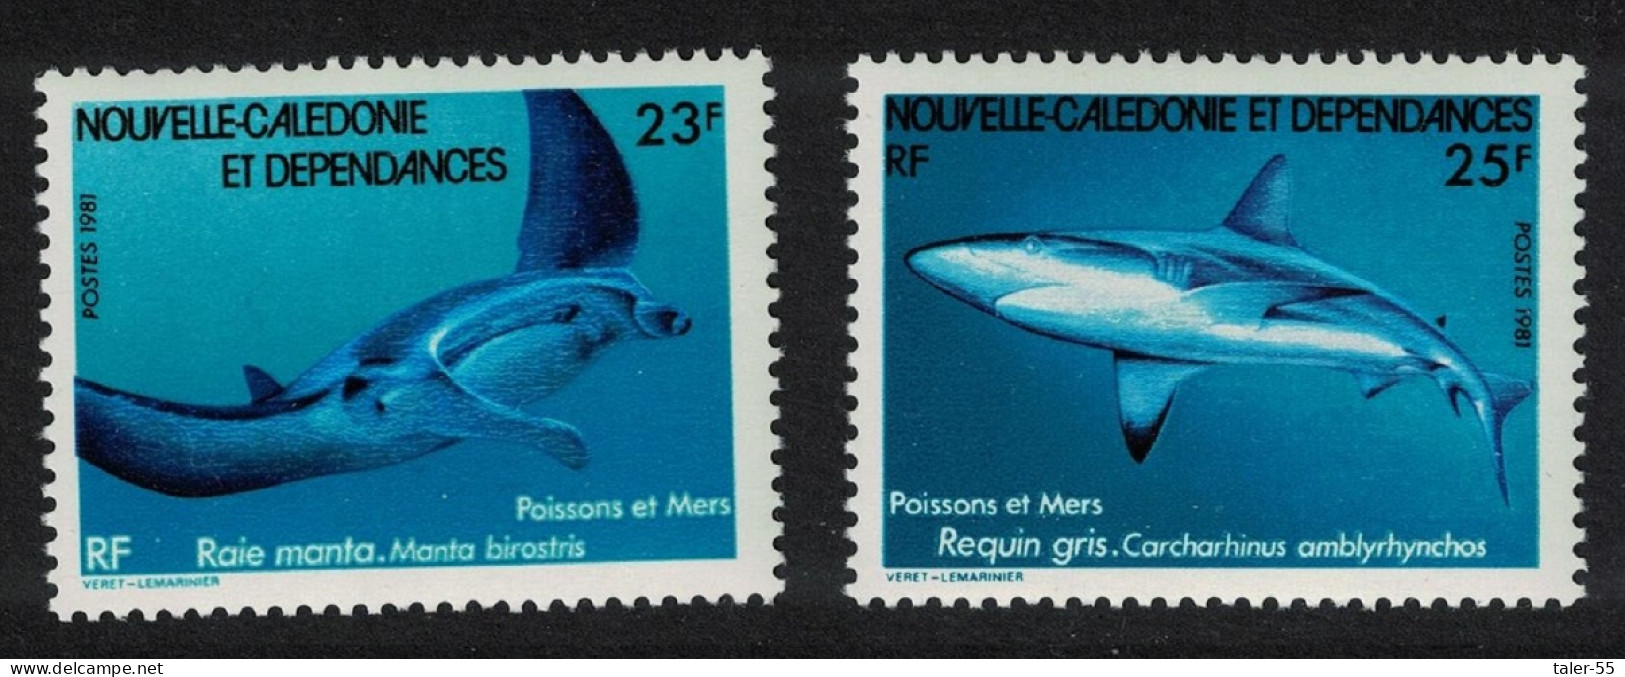 New Caledonia Manta Ray Grey Reef Shark Sea Fish 2v 1981 MNH SG#647-648 - Ongebruikt